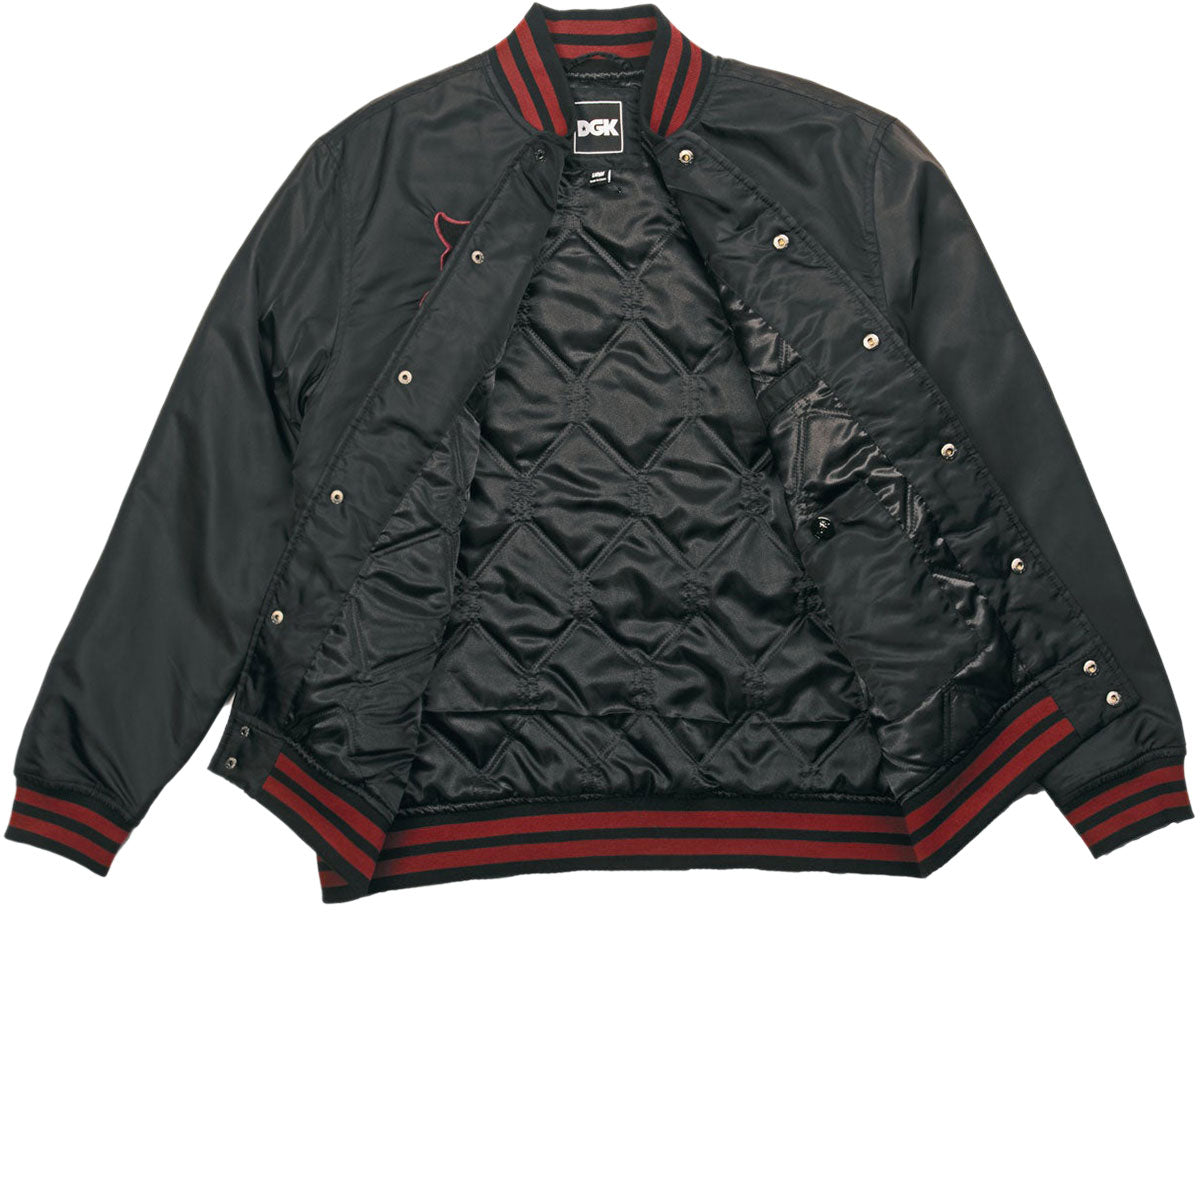 DGK Santa Maria Varsity Jacket - Black image 5